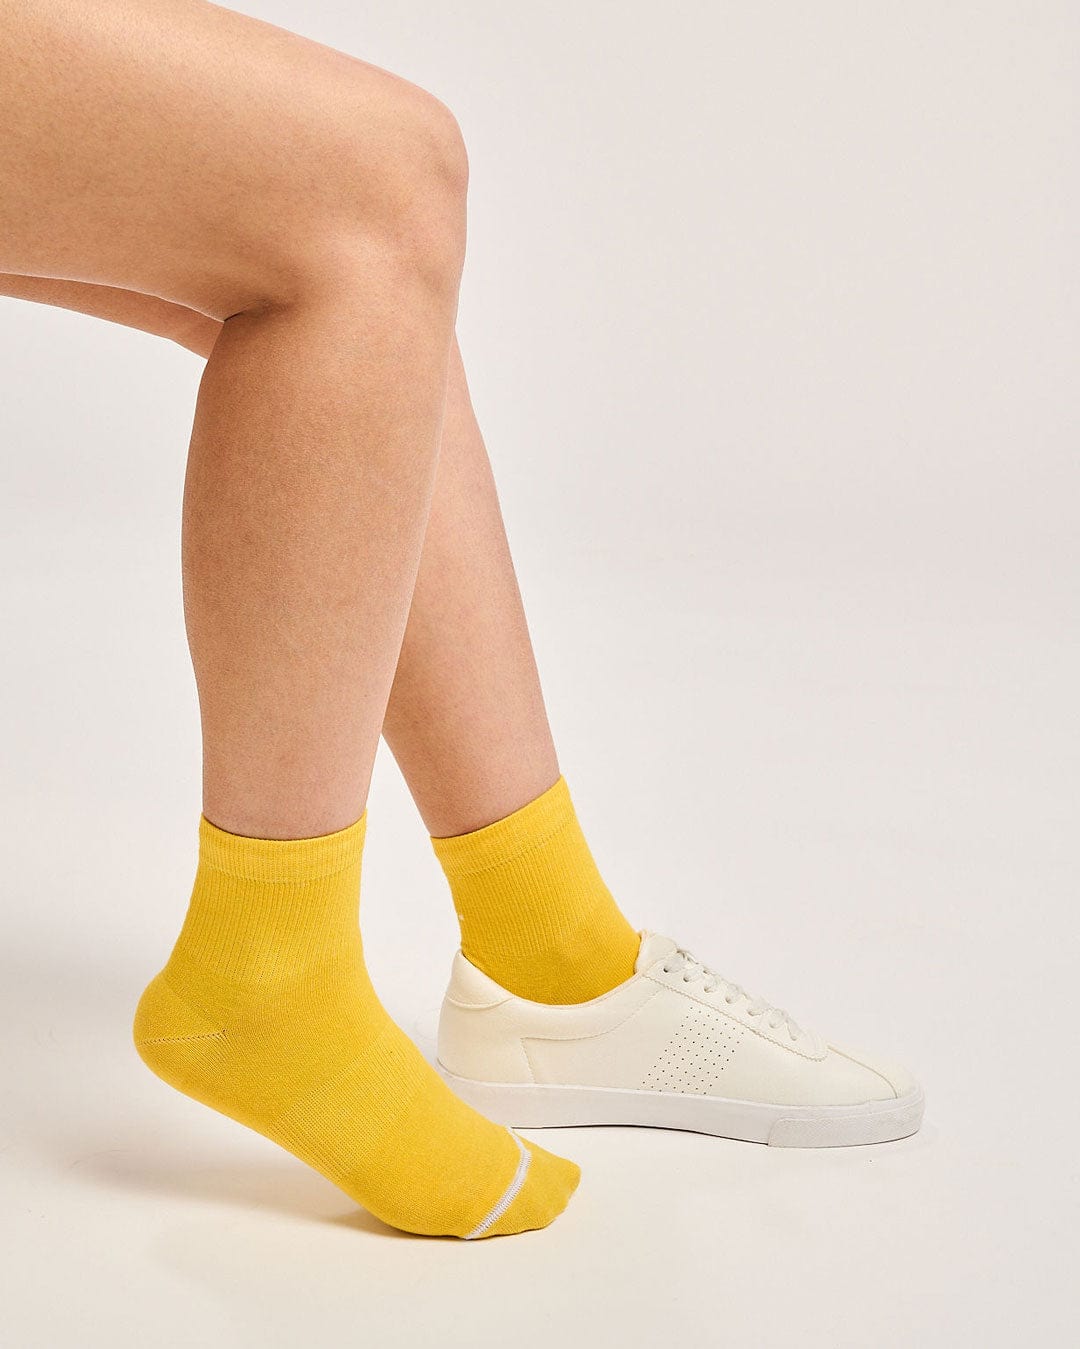 Ecofriendly yellow cycling socks. Seamless toe sport socks